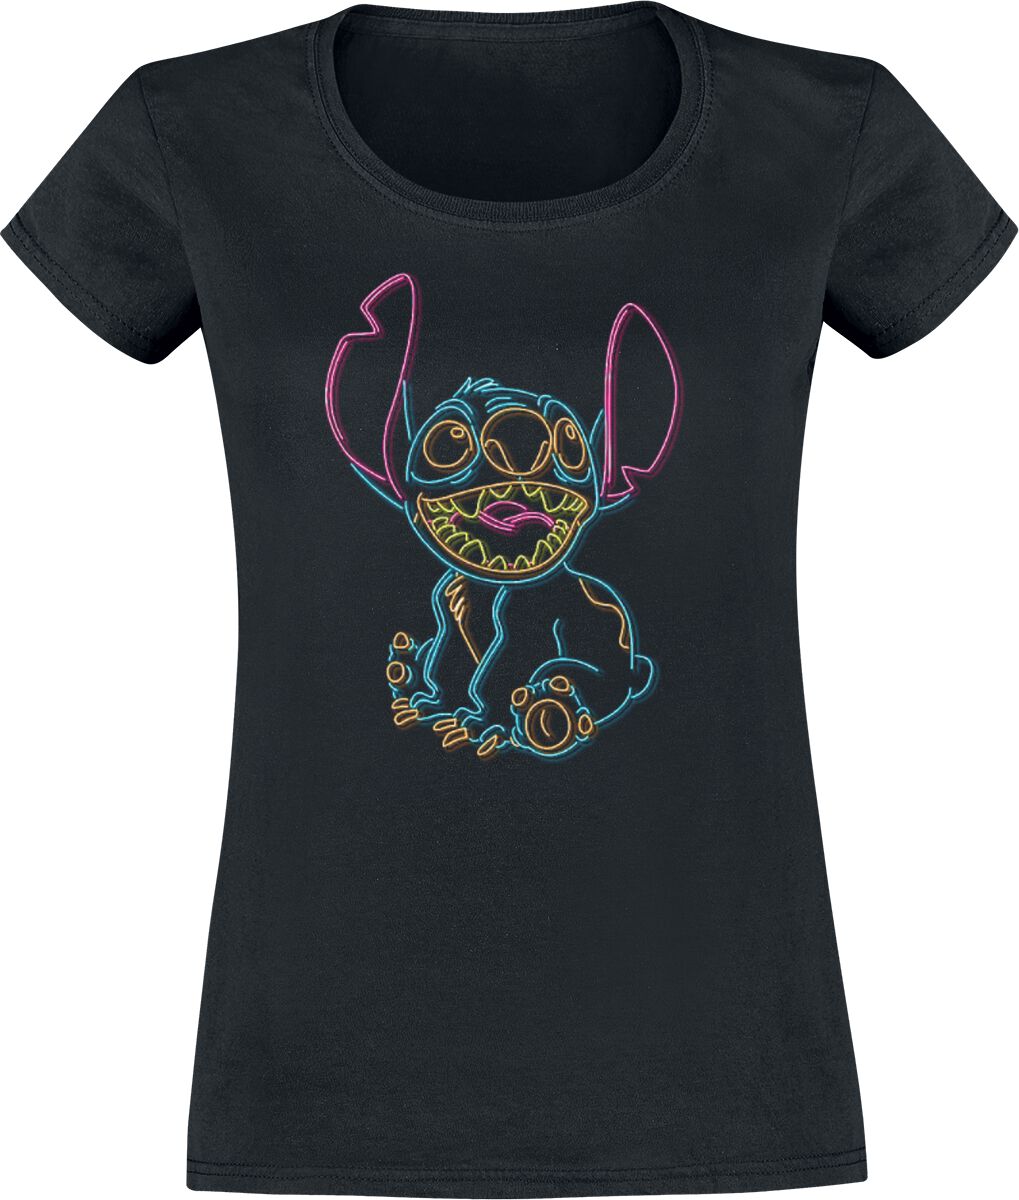 Lilo & Stitch Neon Stitch T-Shirt black